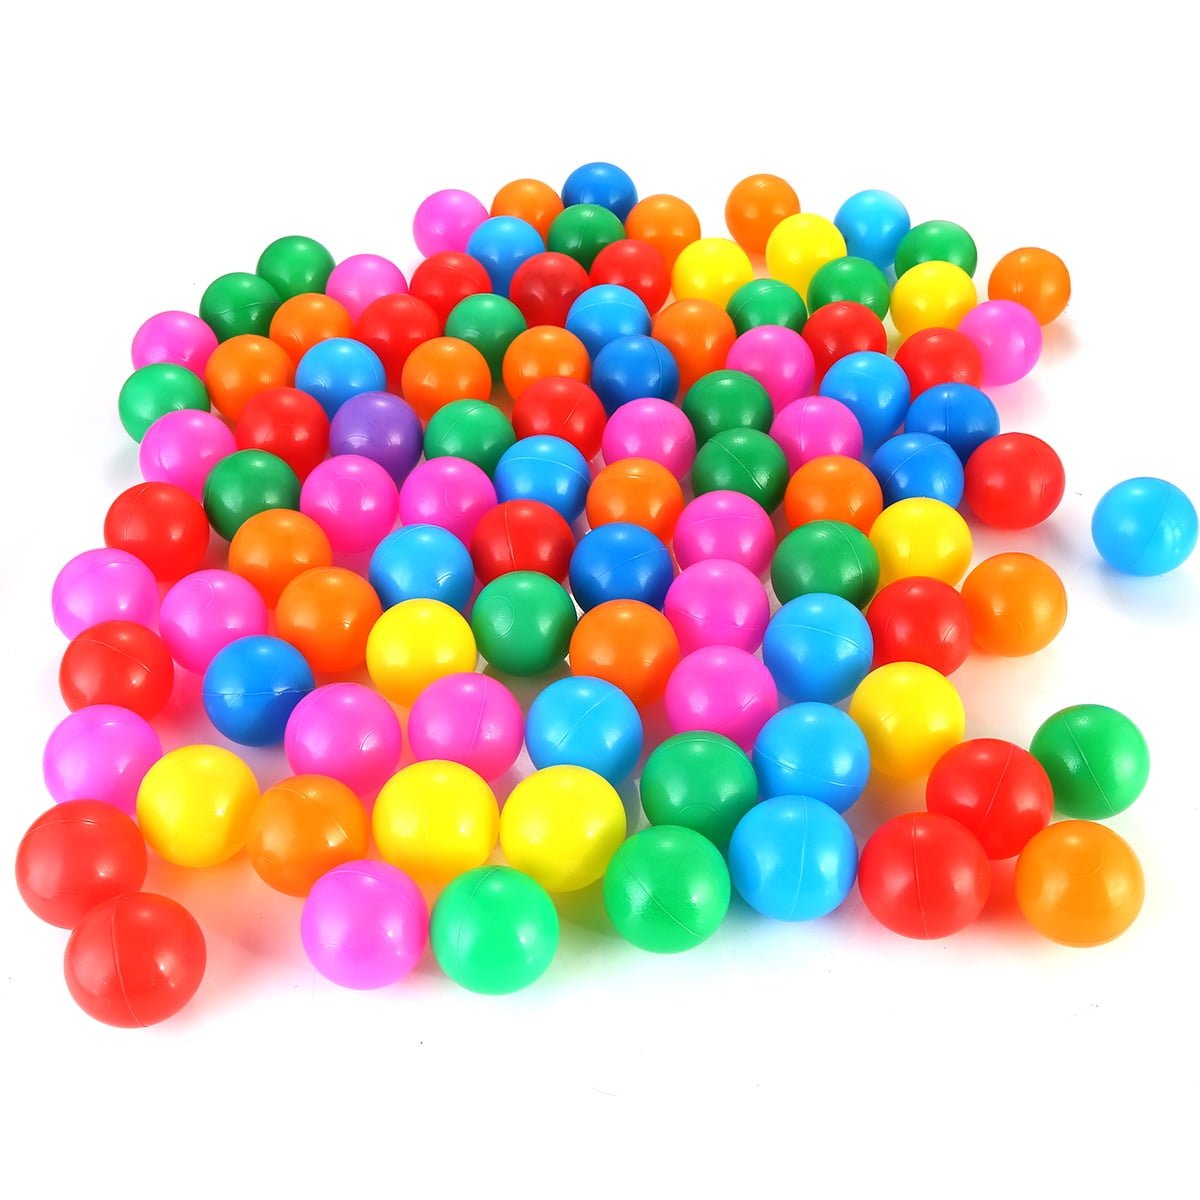 Kids Ball Pit Balls Storage Net Bag Toys Organizer for 200 Balls Without ballNMC 